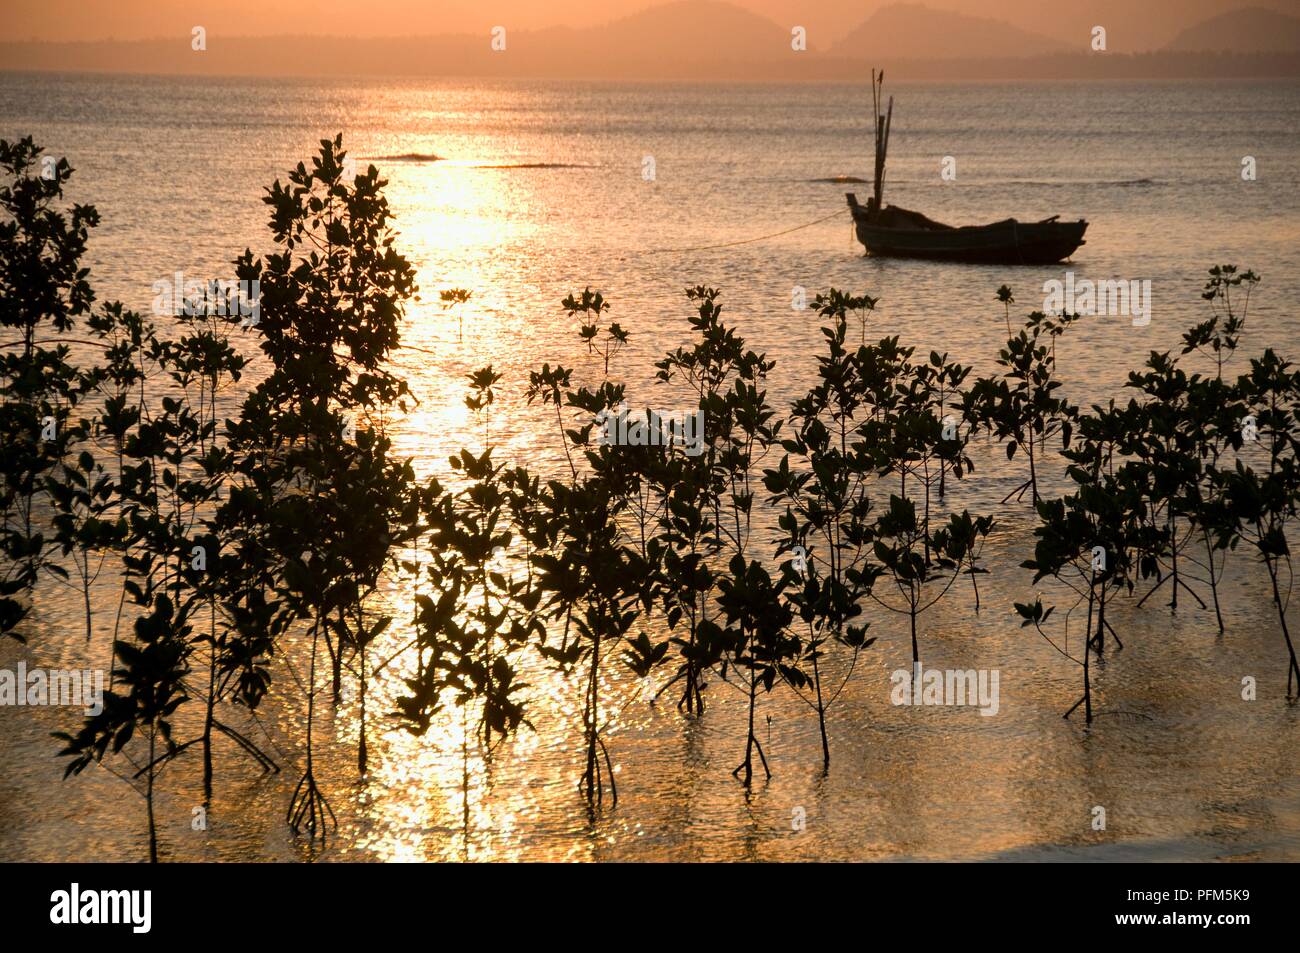 Thailand, Prachuap Khiri Khan Province, Bang Saphan Yai, silhouette of fishing boat and trees in the sea at sunset Stock Photo